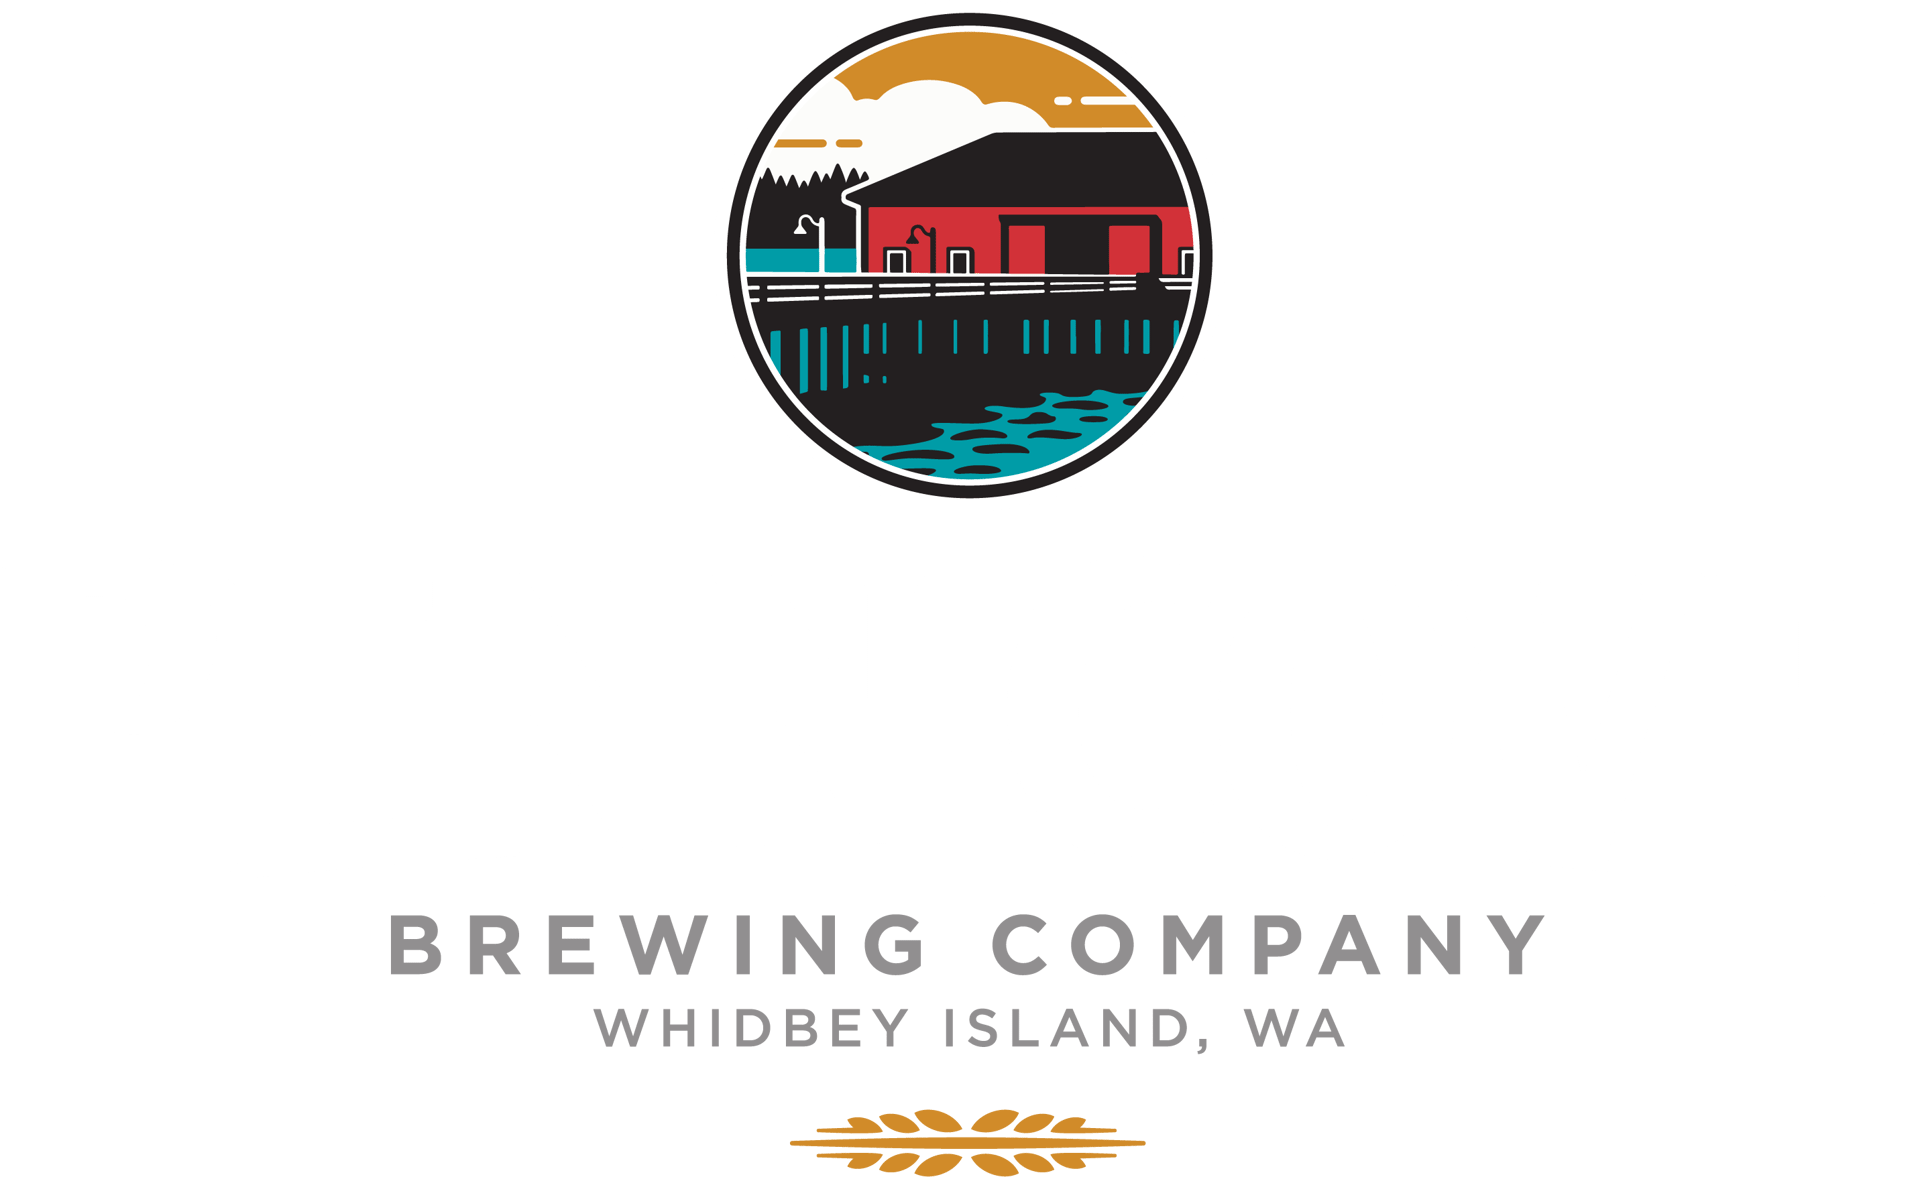 Penn Cove Brewing Company Whidbey Island, WA